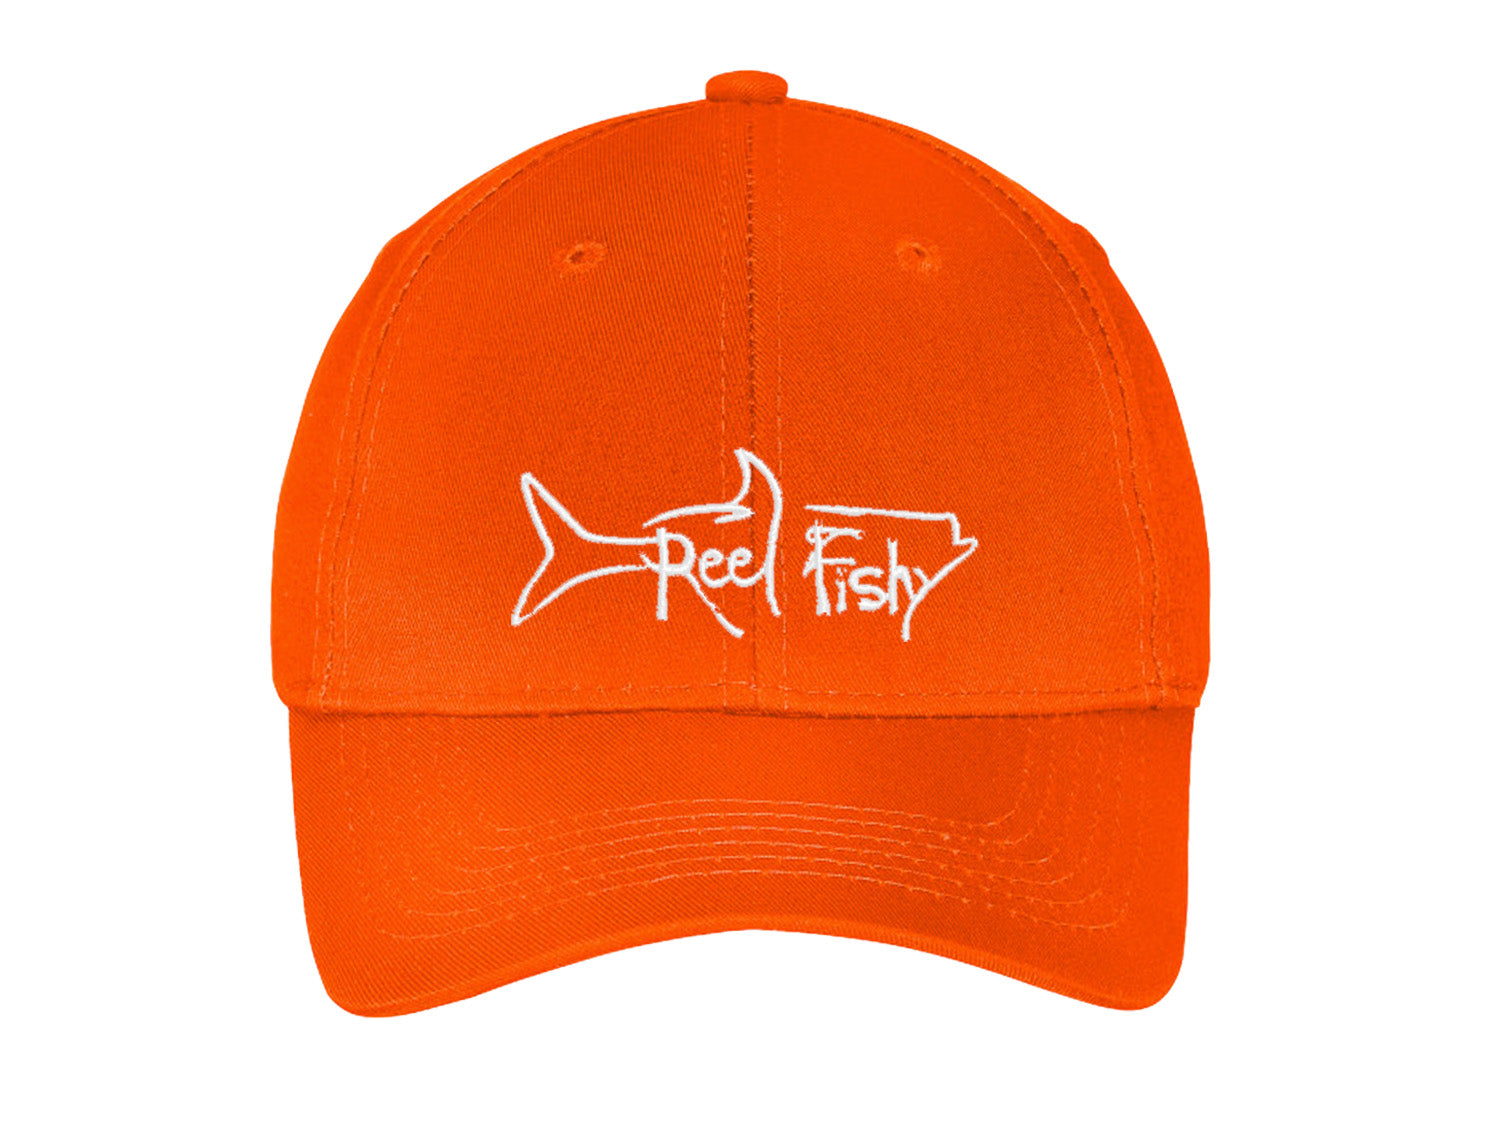 Youth Fishing Hats with Reel Fishy Tarpon Logo - Orange